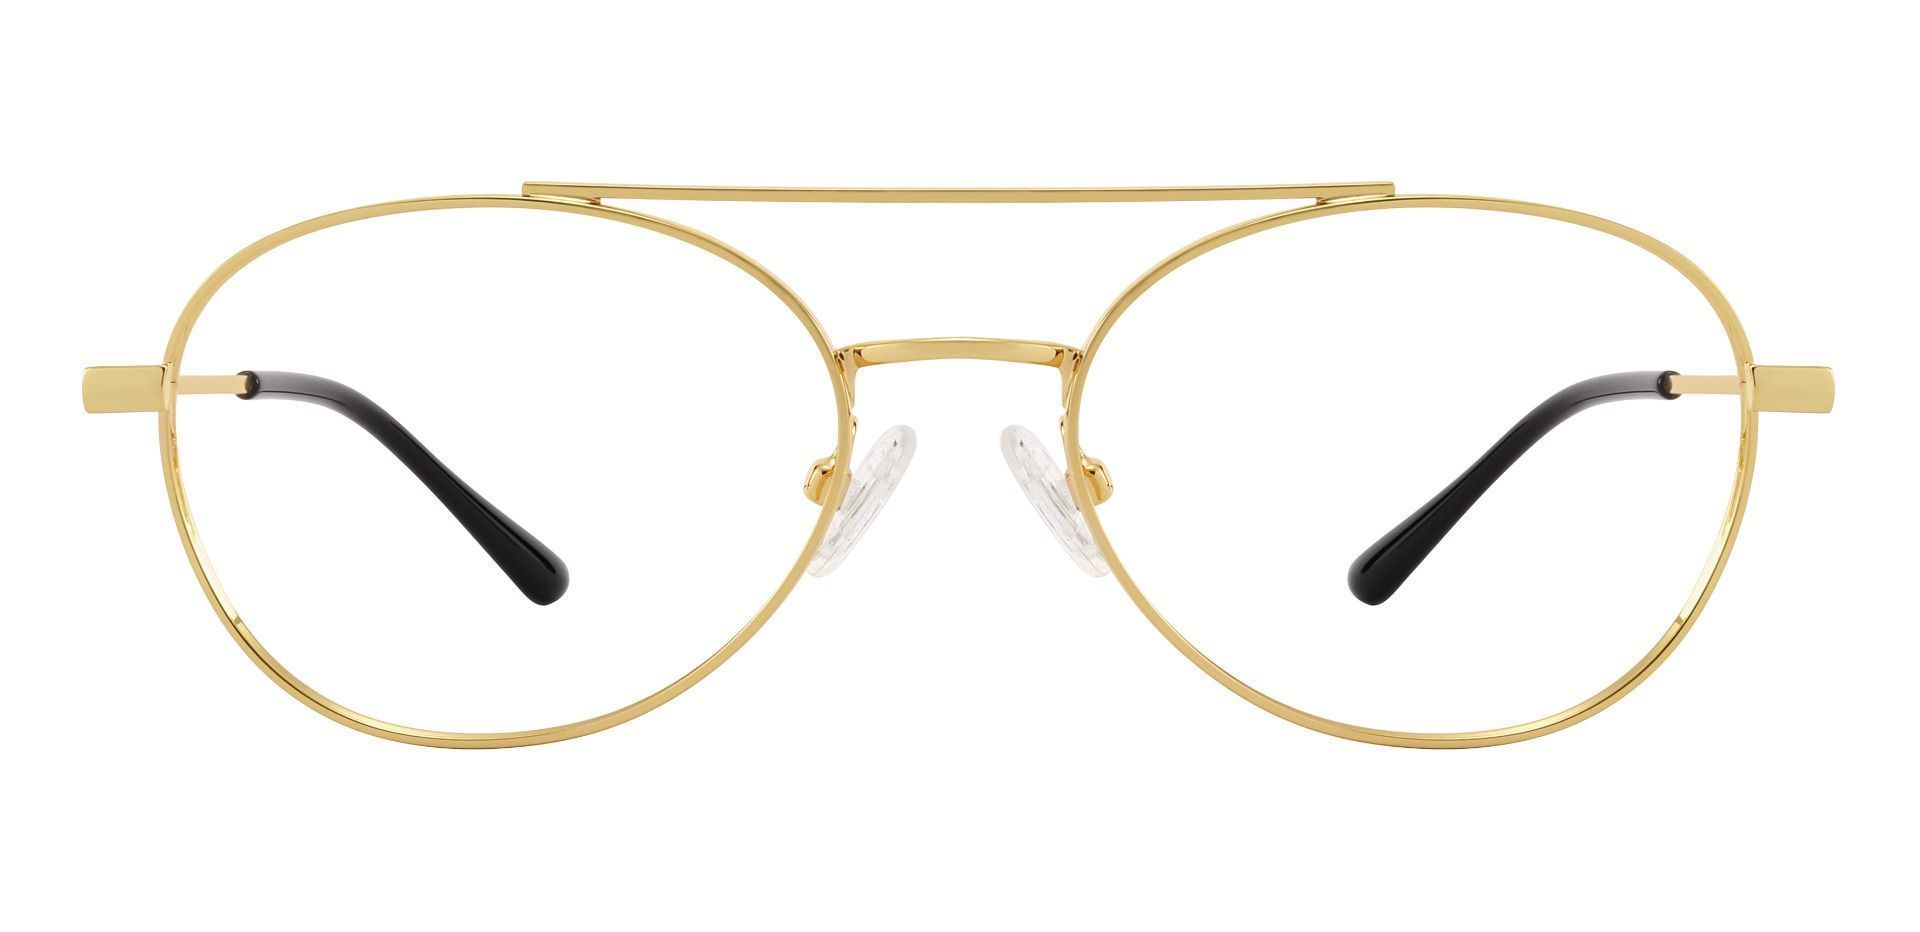 Hinton Aviator Eyeglasses Frame - Gold